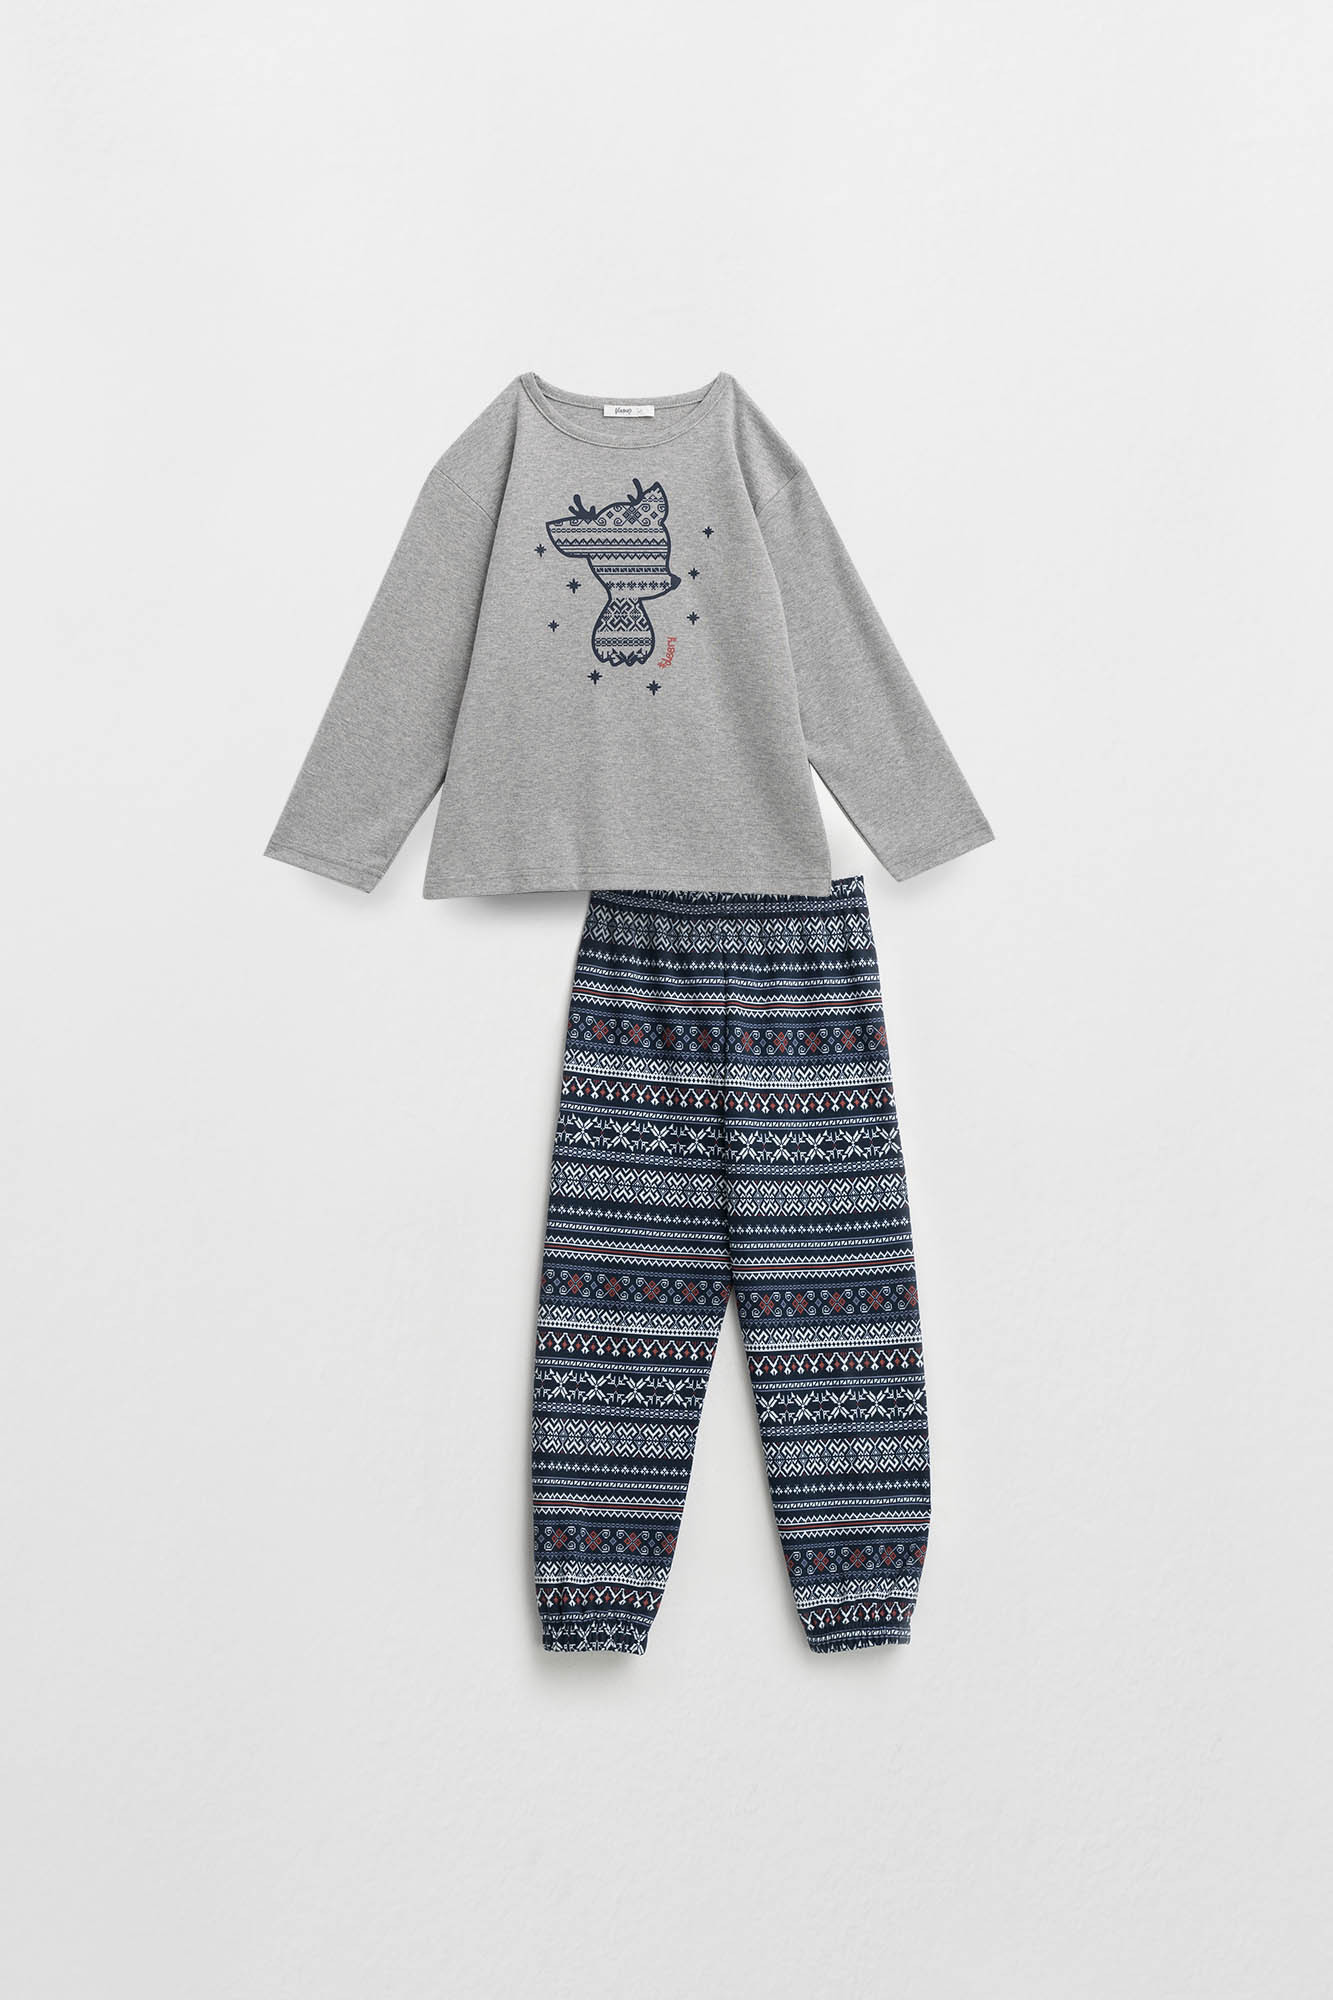 Vamp - Dvoudílné dětské pyžamo - Darby 17576 - Vamp gray melange 8